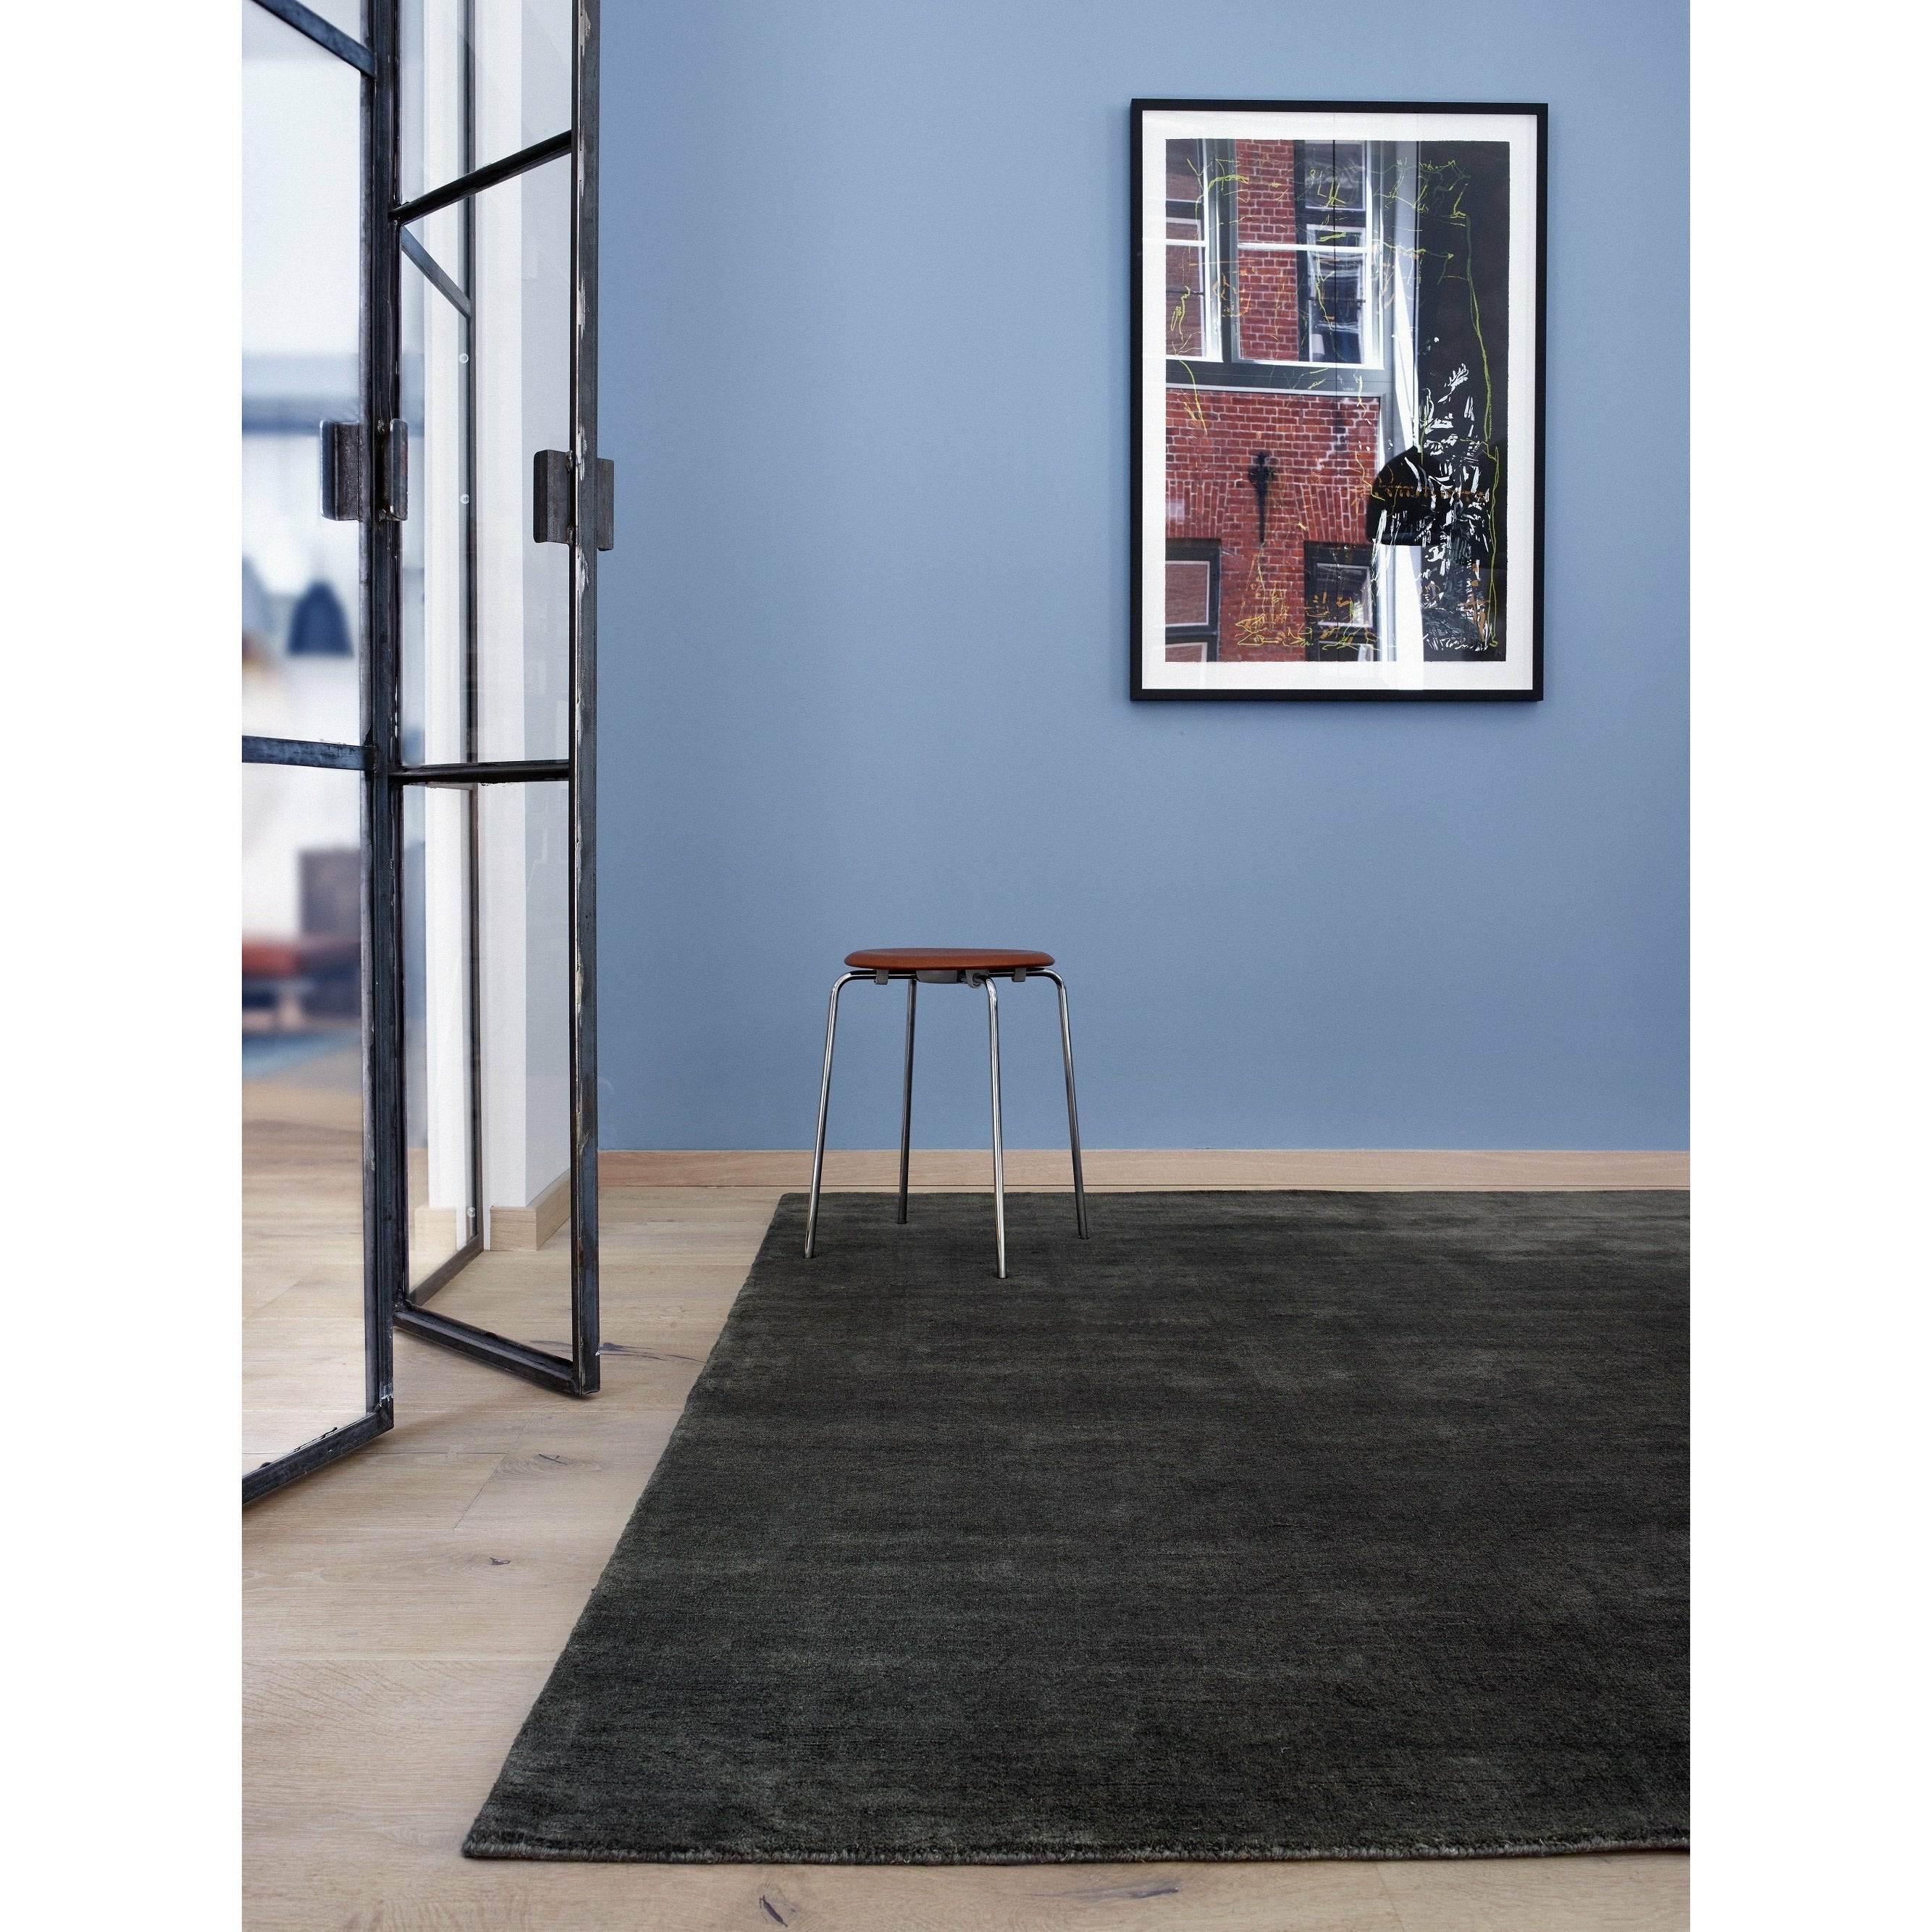 Massimo Jordtæppet trækul, 170x240 cm